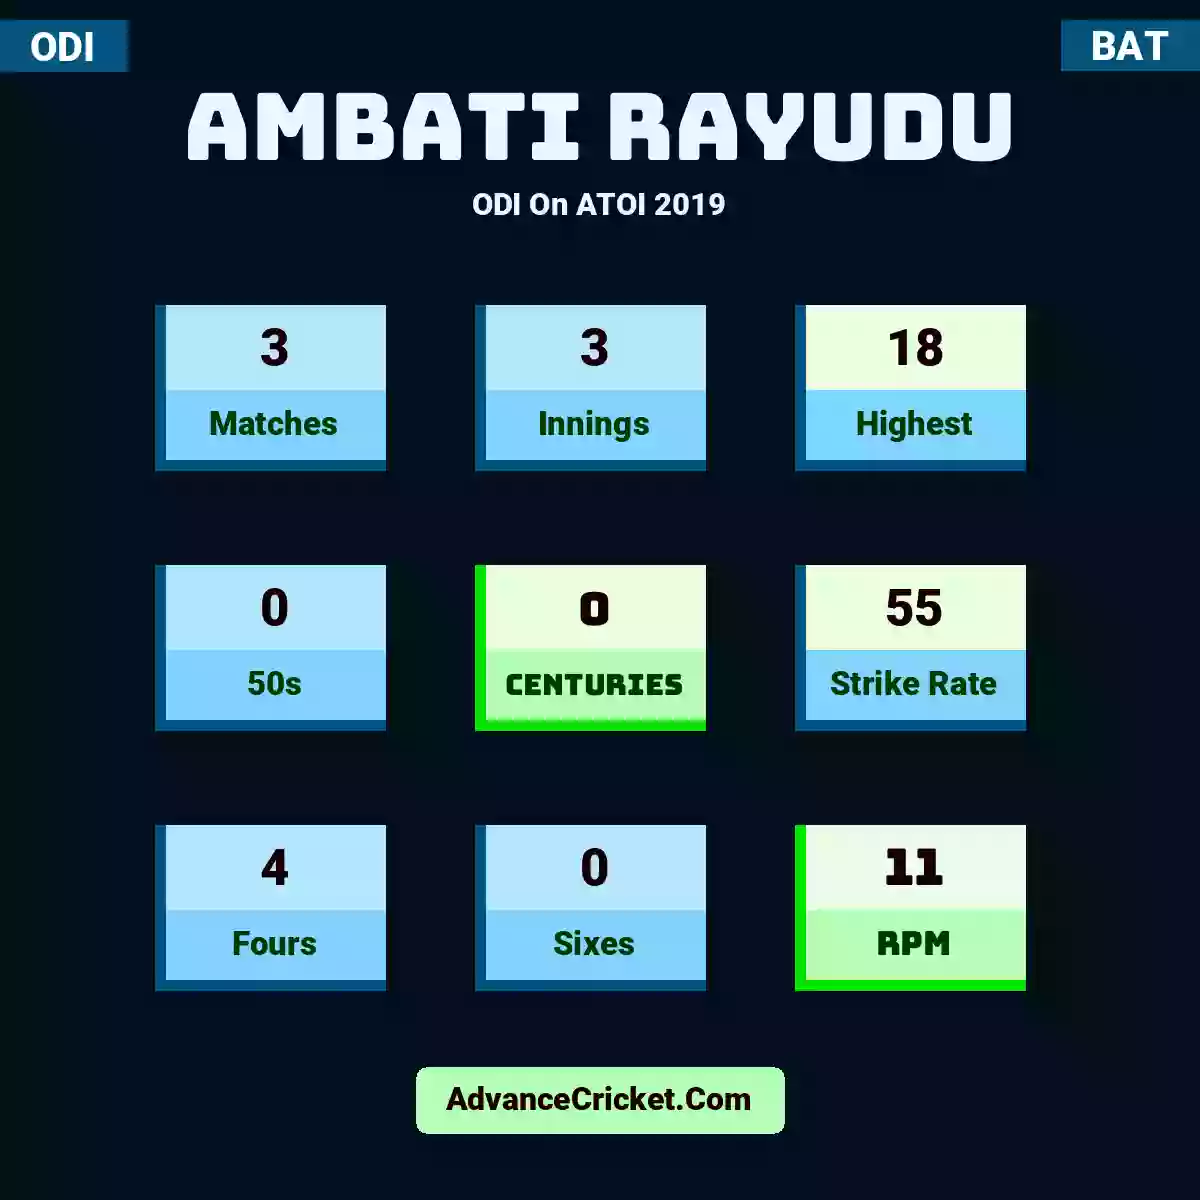 Ambati Rayudu ODI  On ATOI 2019, Ambati Rayudu played 3 matches, scored 18 runs as highest, 0 half-centuries, and 0 centuries, with a strike rate of 55. A.Rayudu hit 4 fours and 0 sixes, with an RPM of 11.